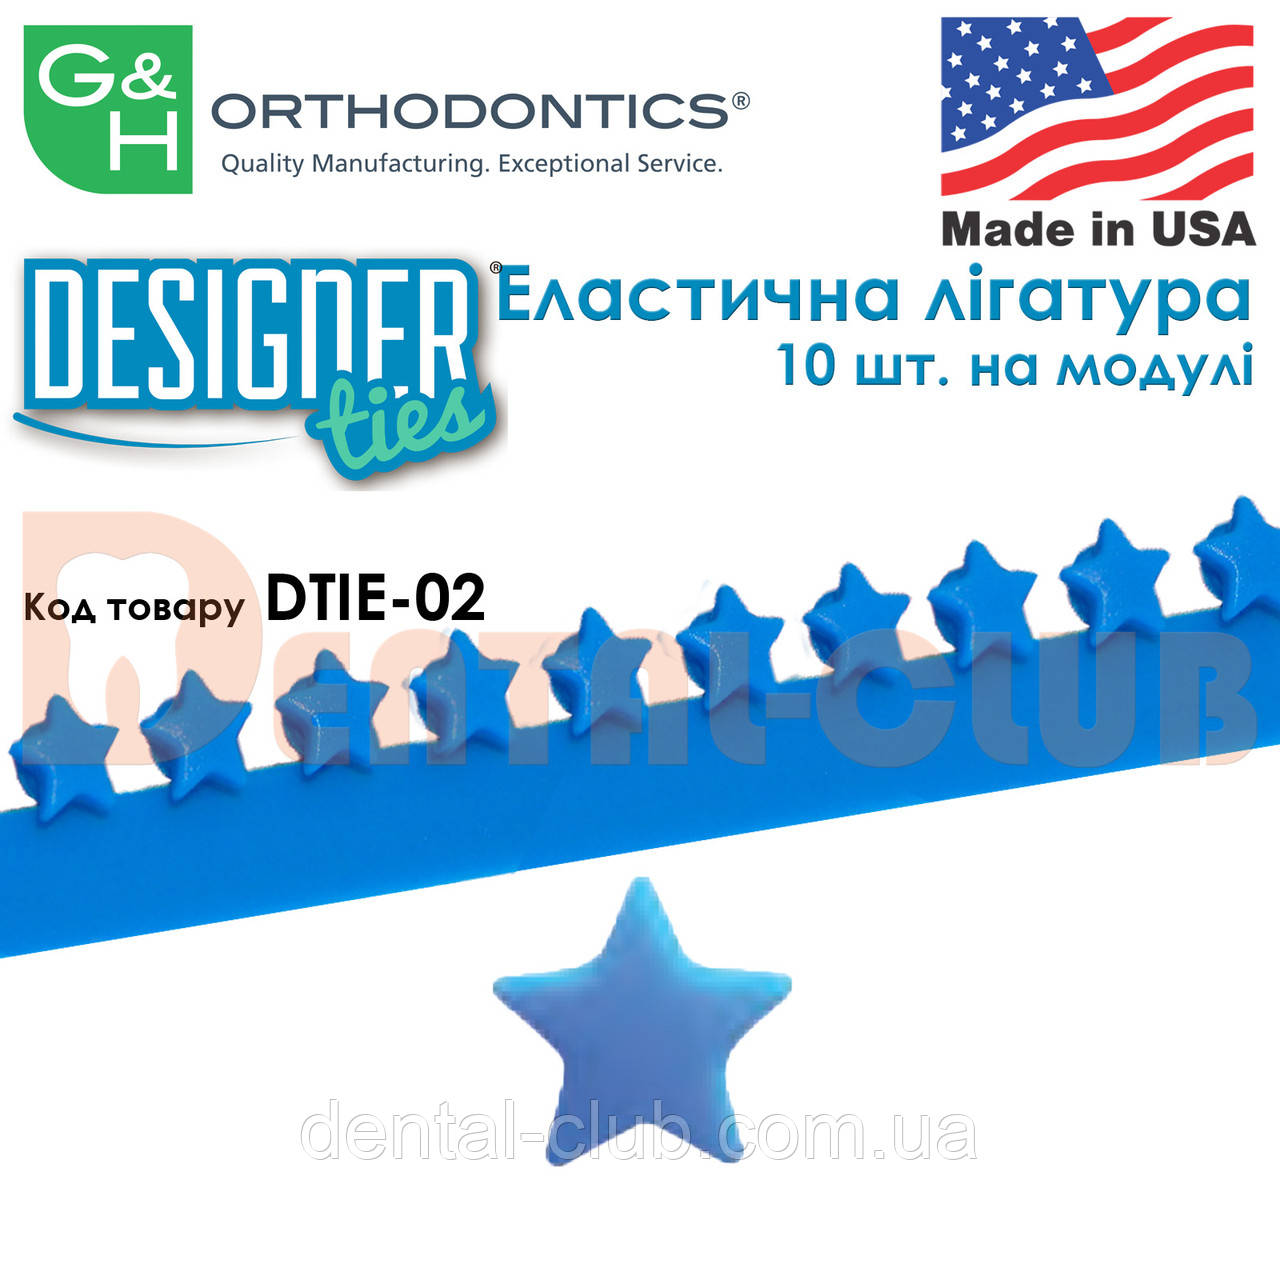 Дизайнерська еластична лігатура 10 шт. на модулі DesignerTies® (G&H Orthodontics) США, без латексу картинка - Синя зірка ( Star Blue DTIE-02 )